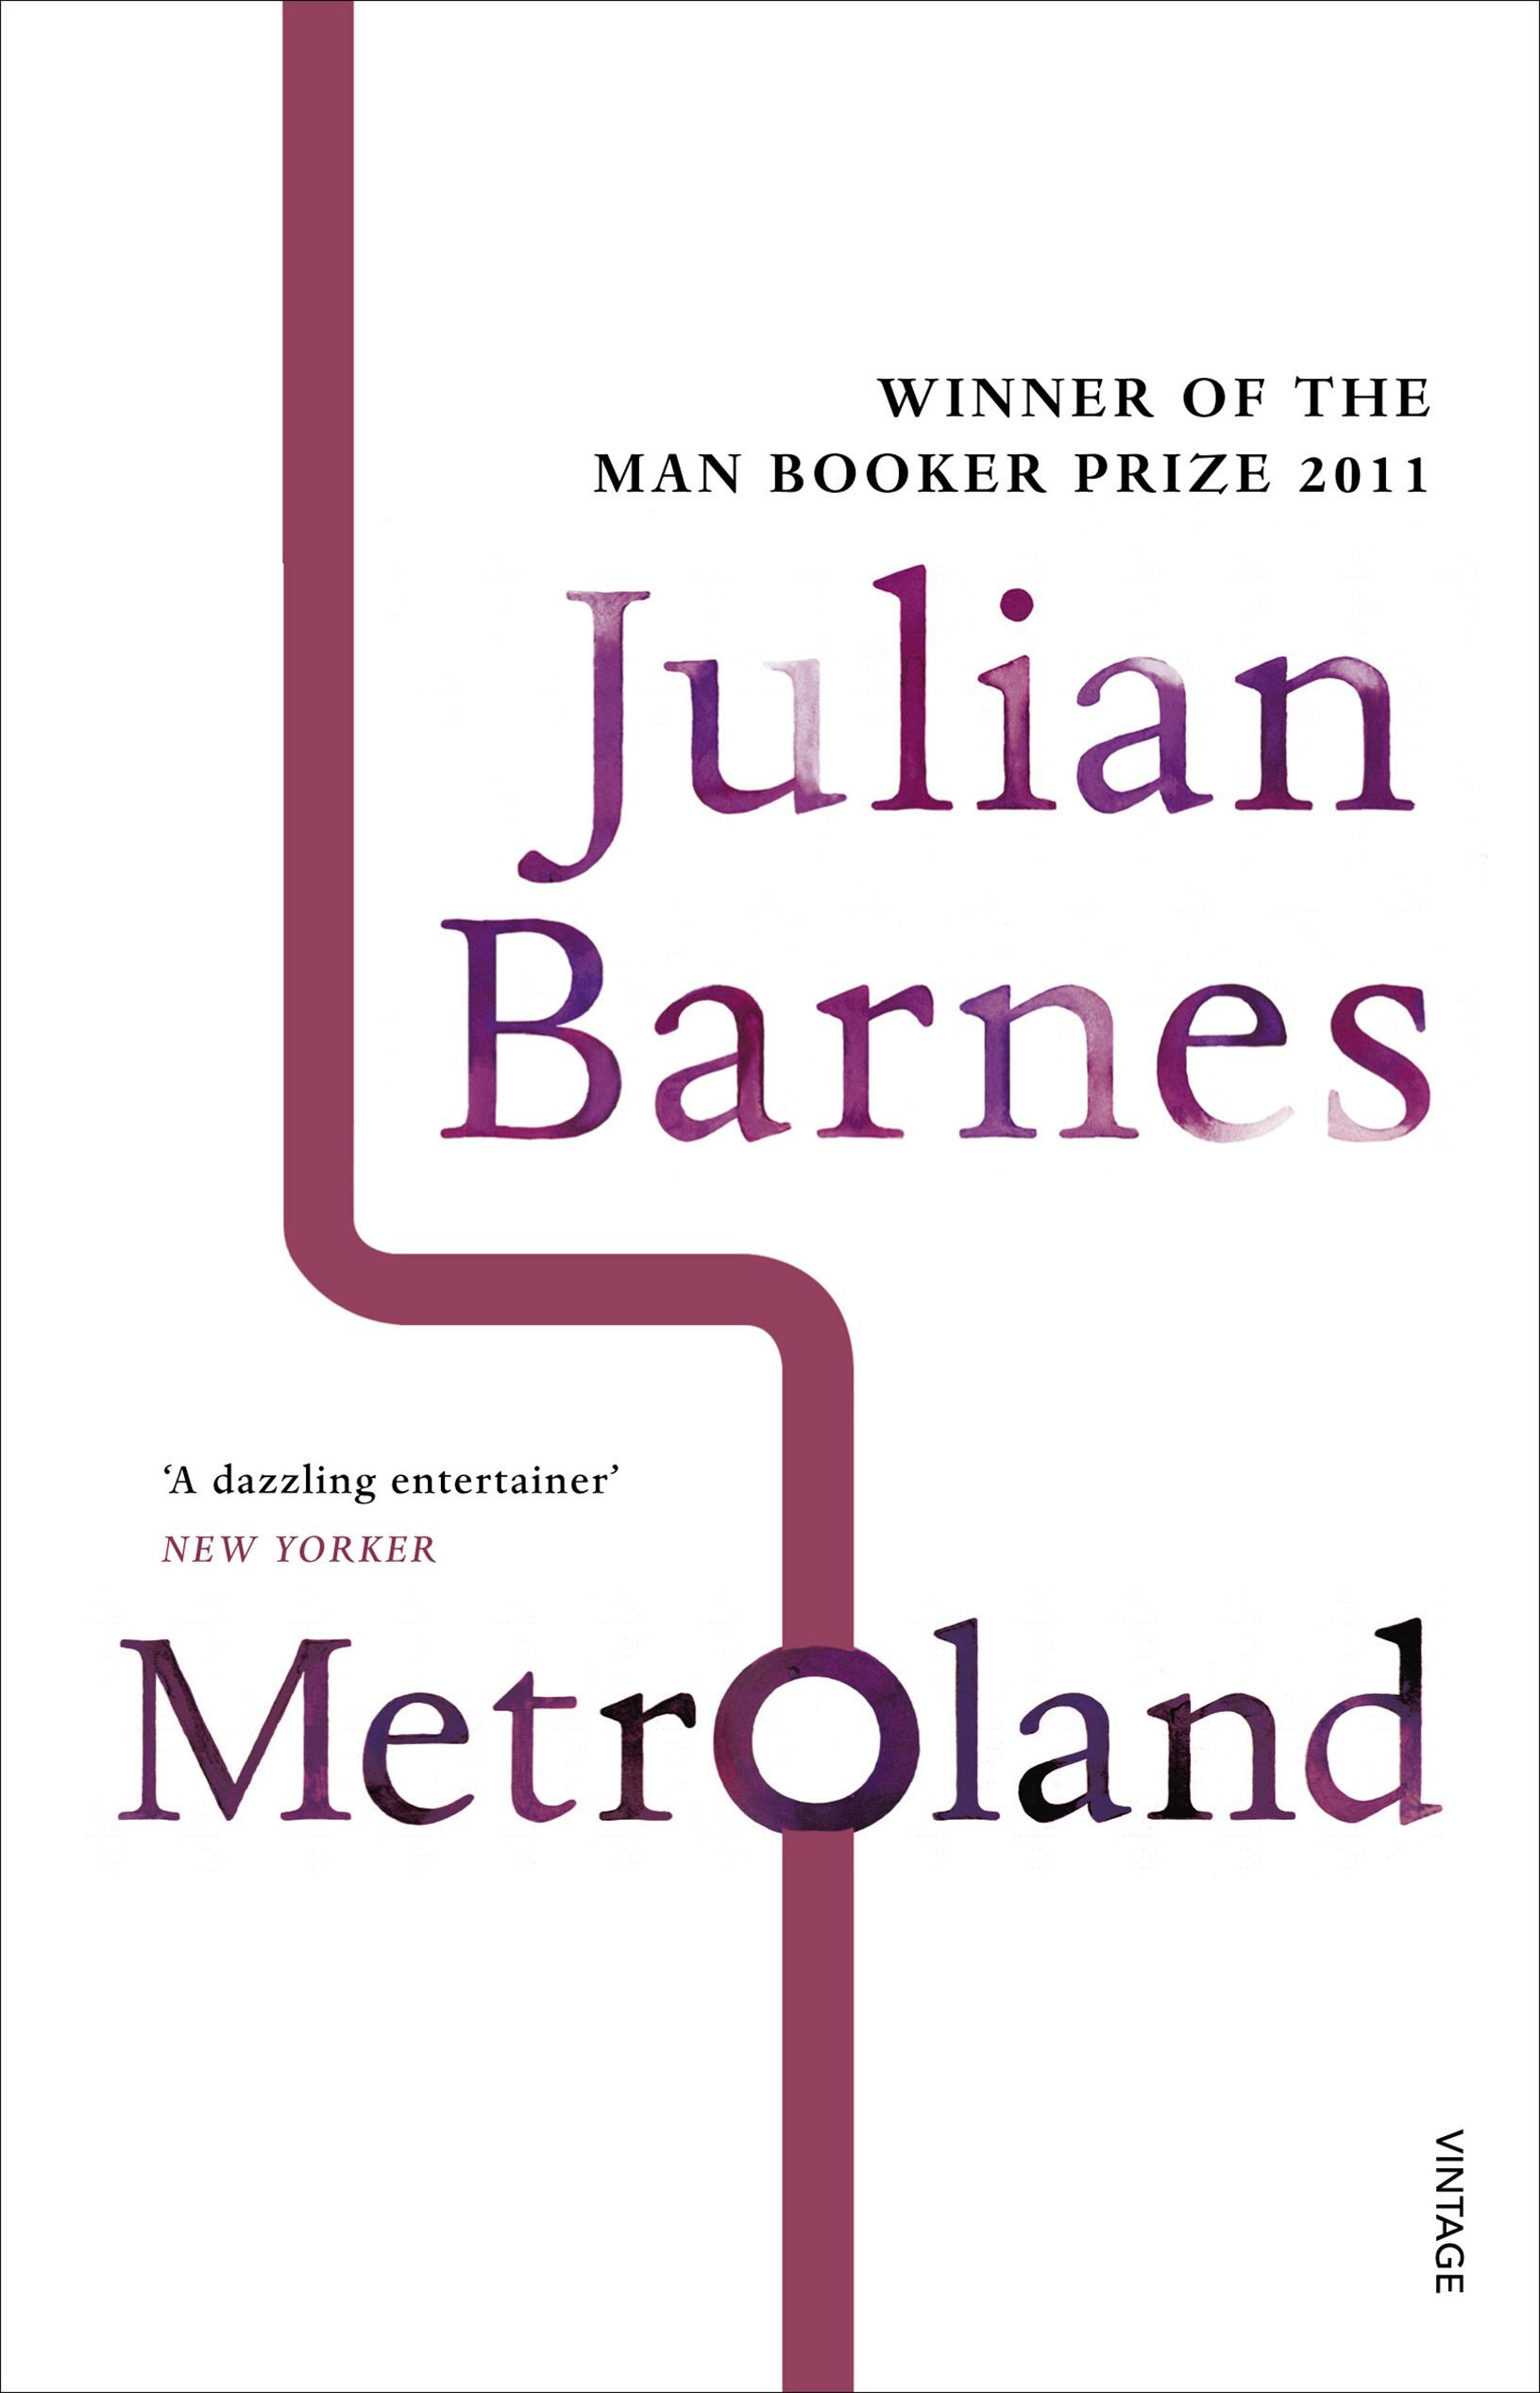 Metroland - Barnes, Julian